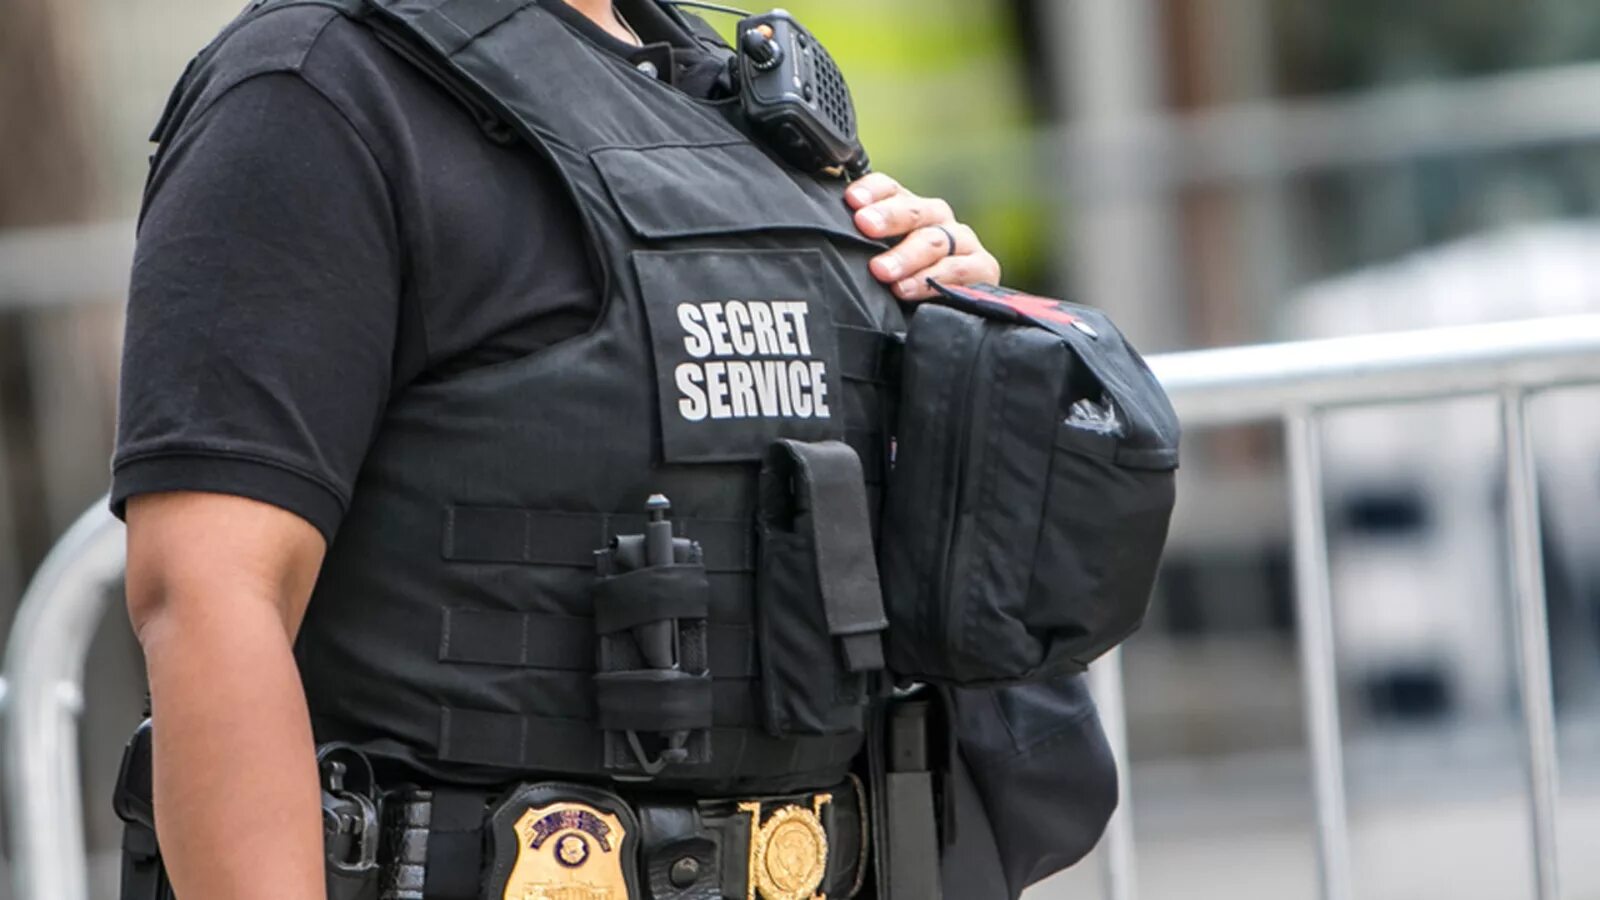 Us Secret service. United States Secret service USSS. Секретная служба США спецназ. Полиция секретной службы США.